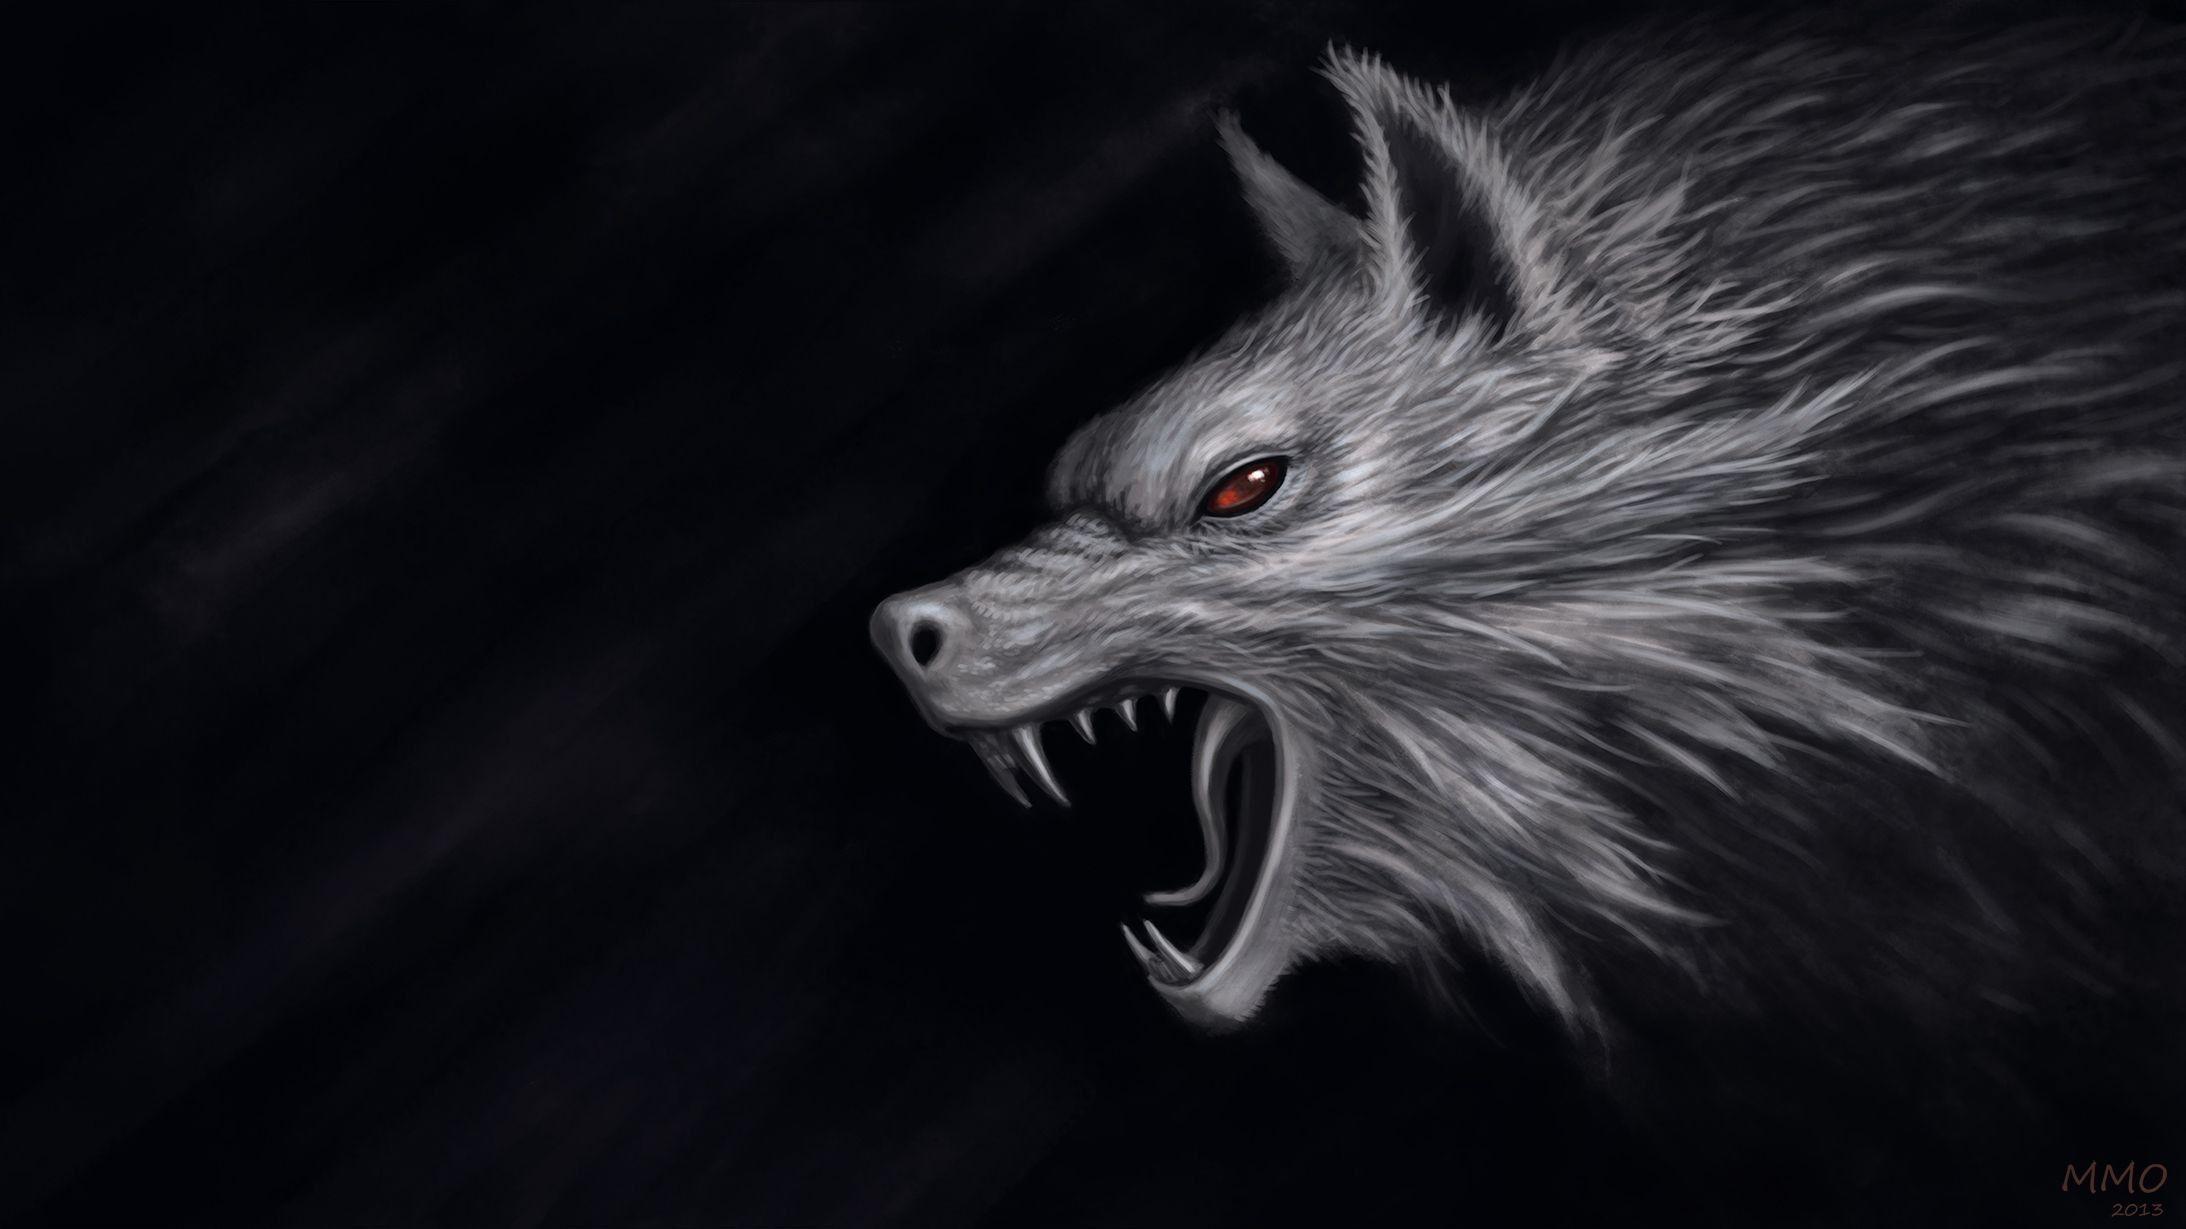 Killer Wolfs Wallpapers - Wallpaper Cave.